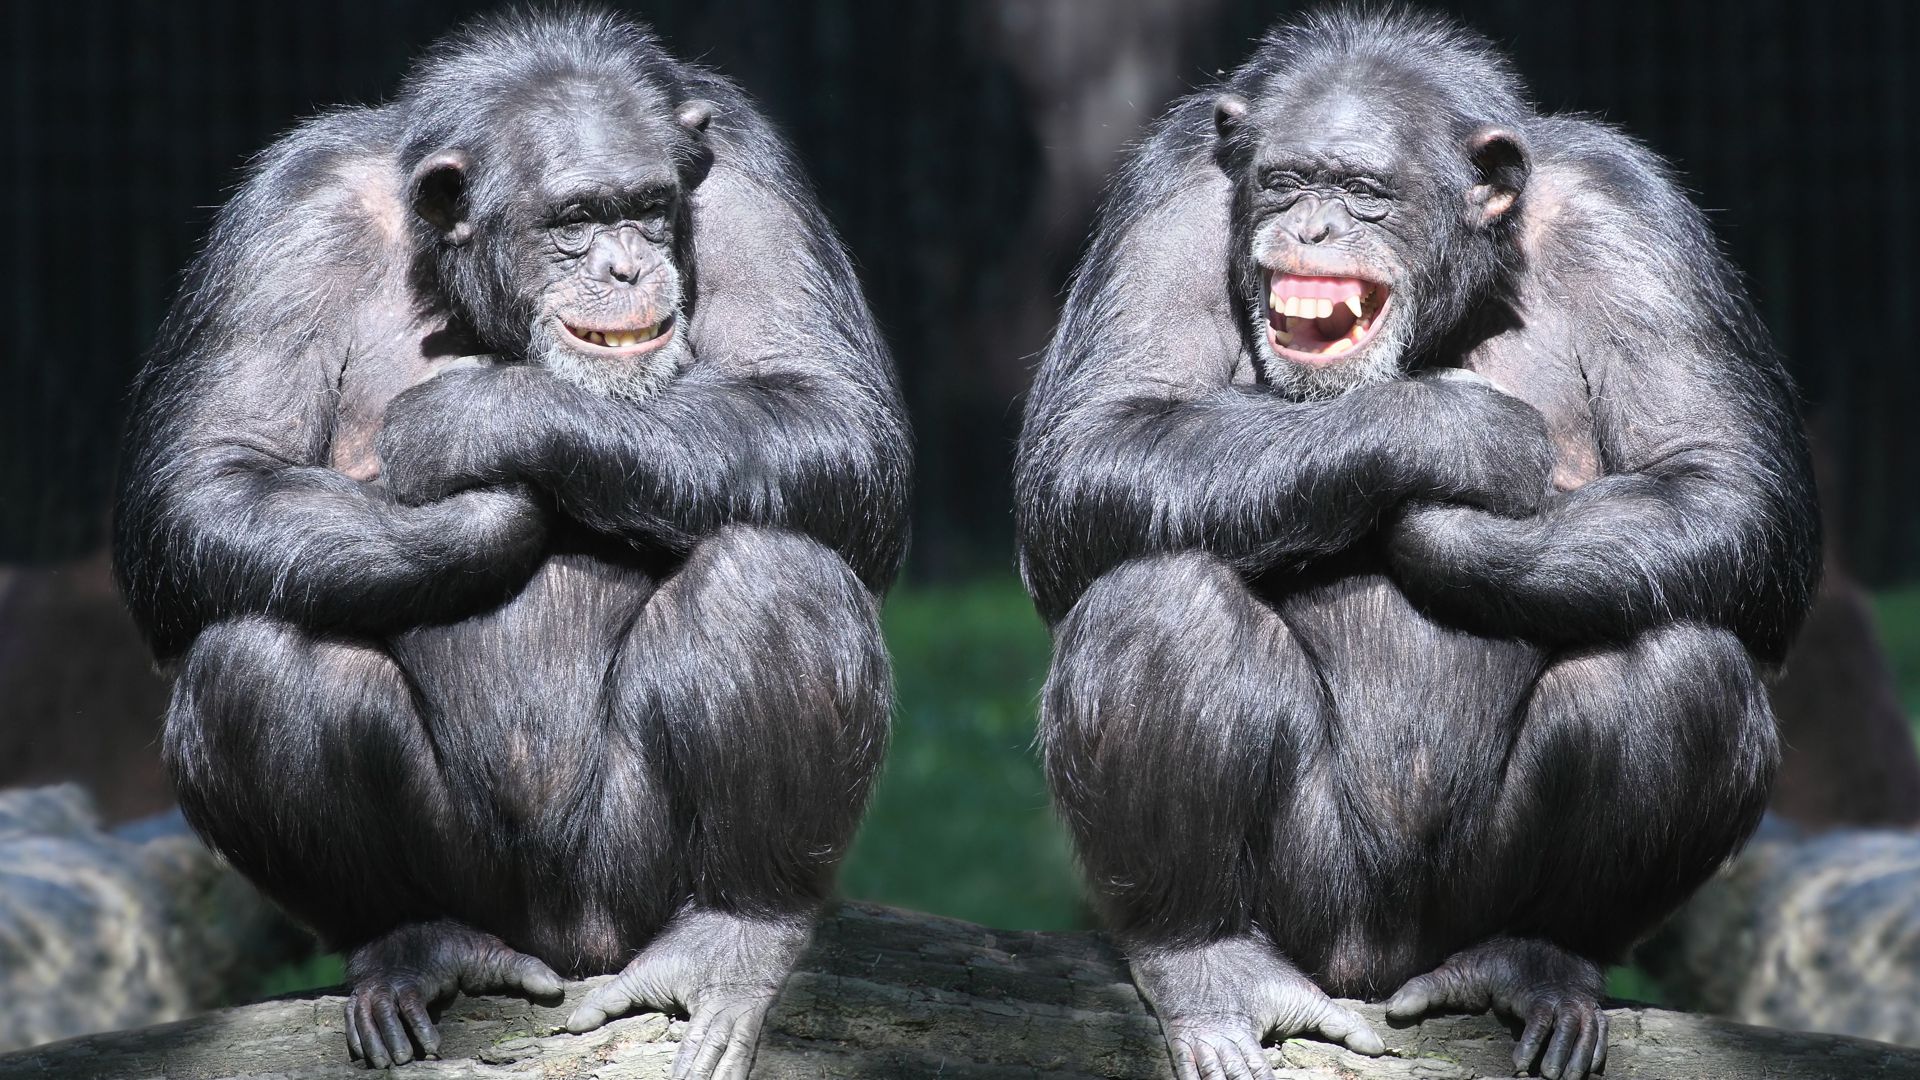 шимпанзе, пара, милые животные, обезъяна, забавный, chimpanzee, couple, cute animals, monkey, funny (horizontal)